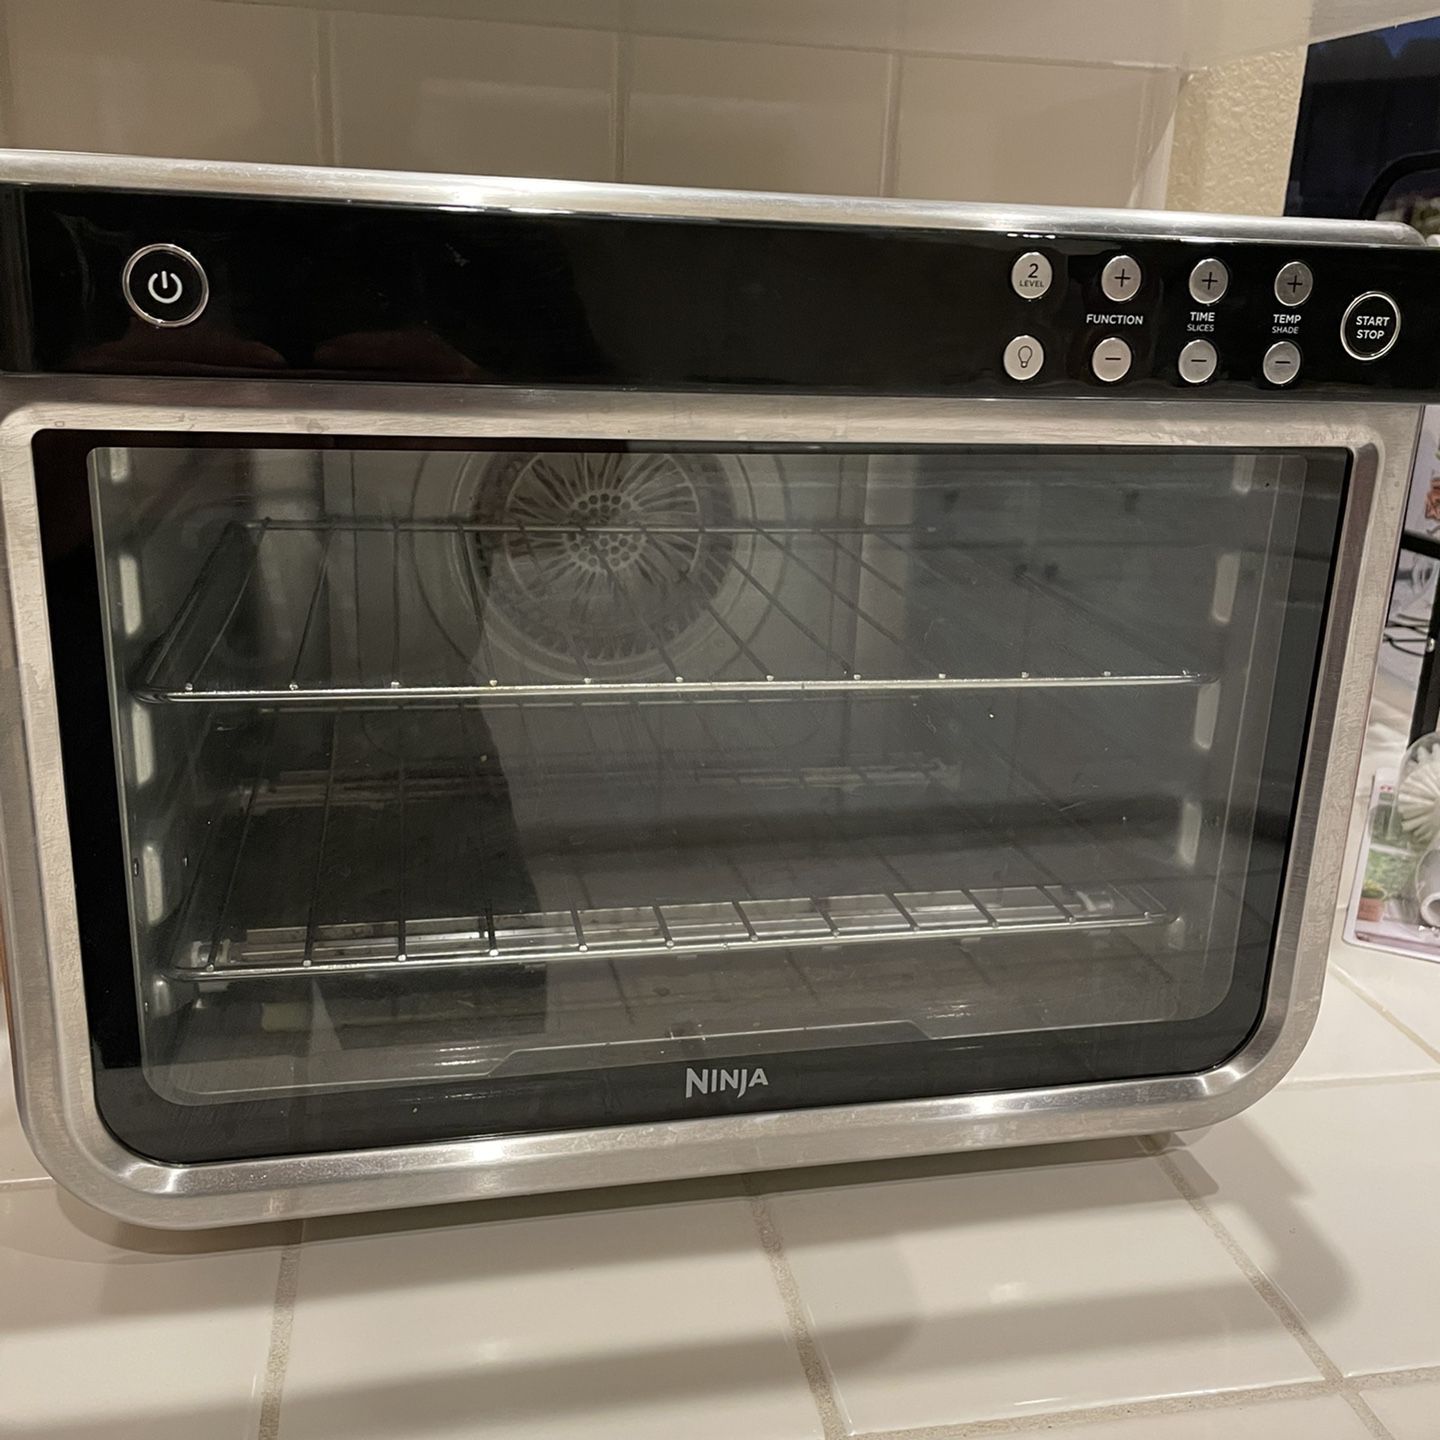 Ninja Foodi Dual Heat Air Fryer Oven SP301 for Sale in Lawrence, IN -  OfferUp